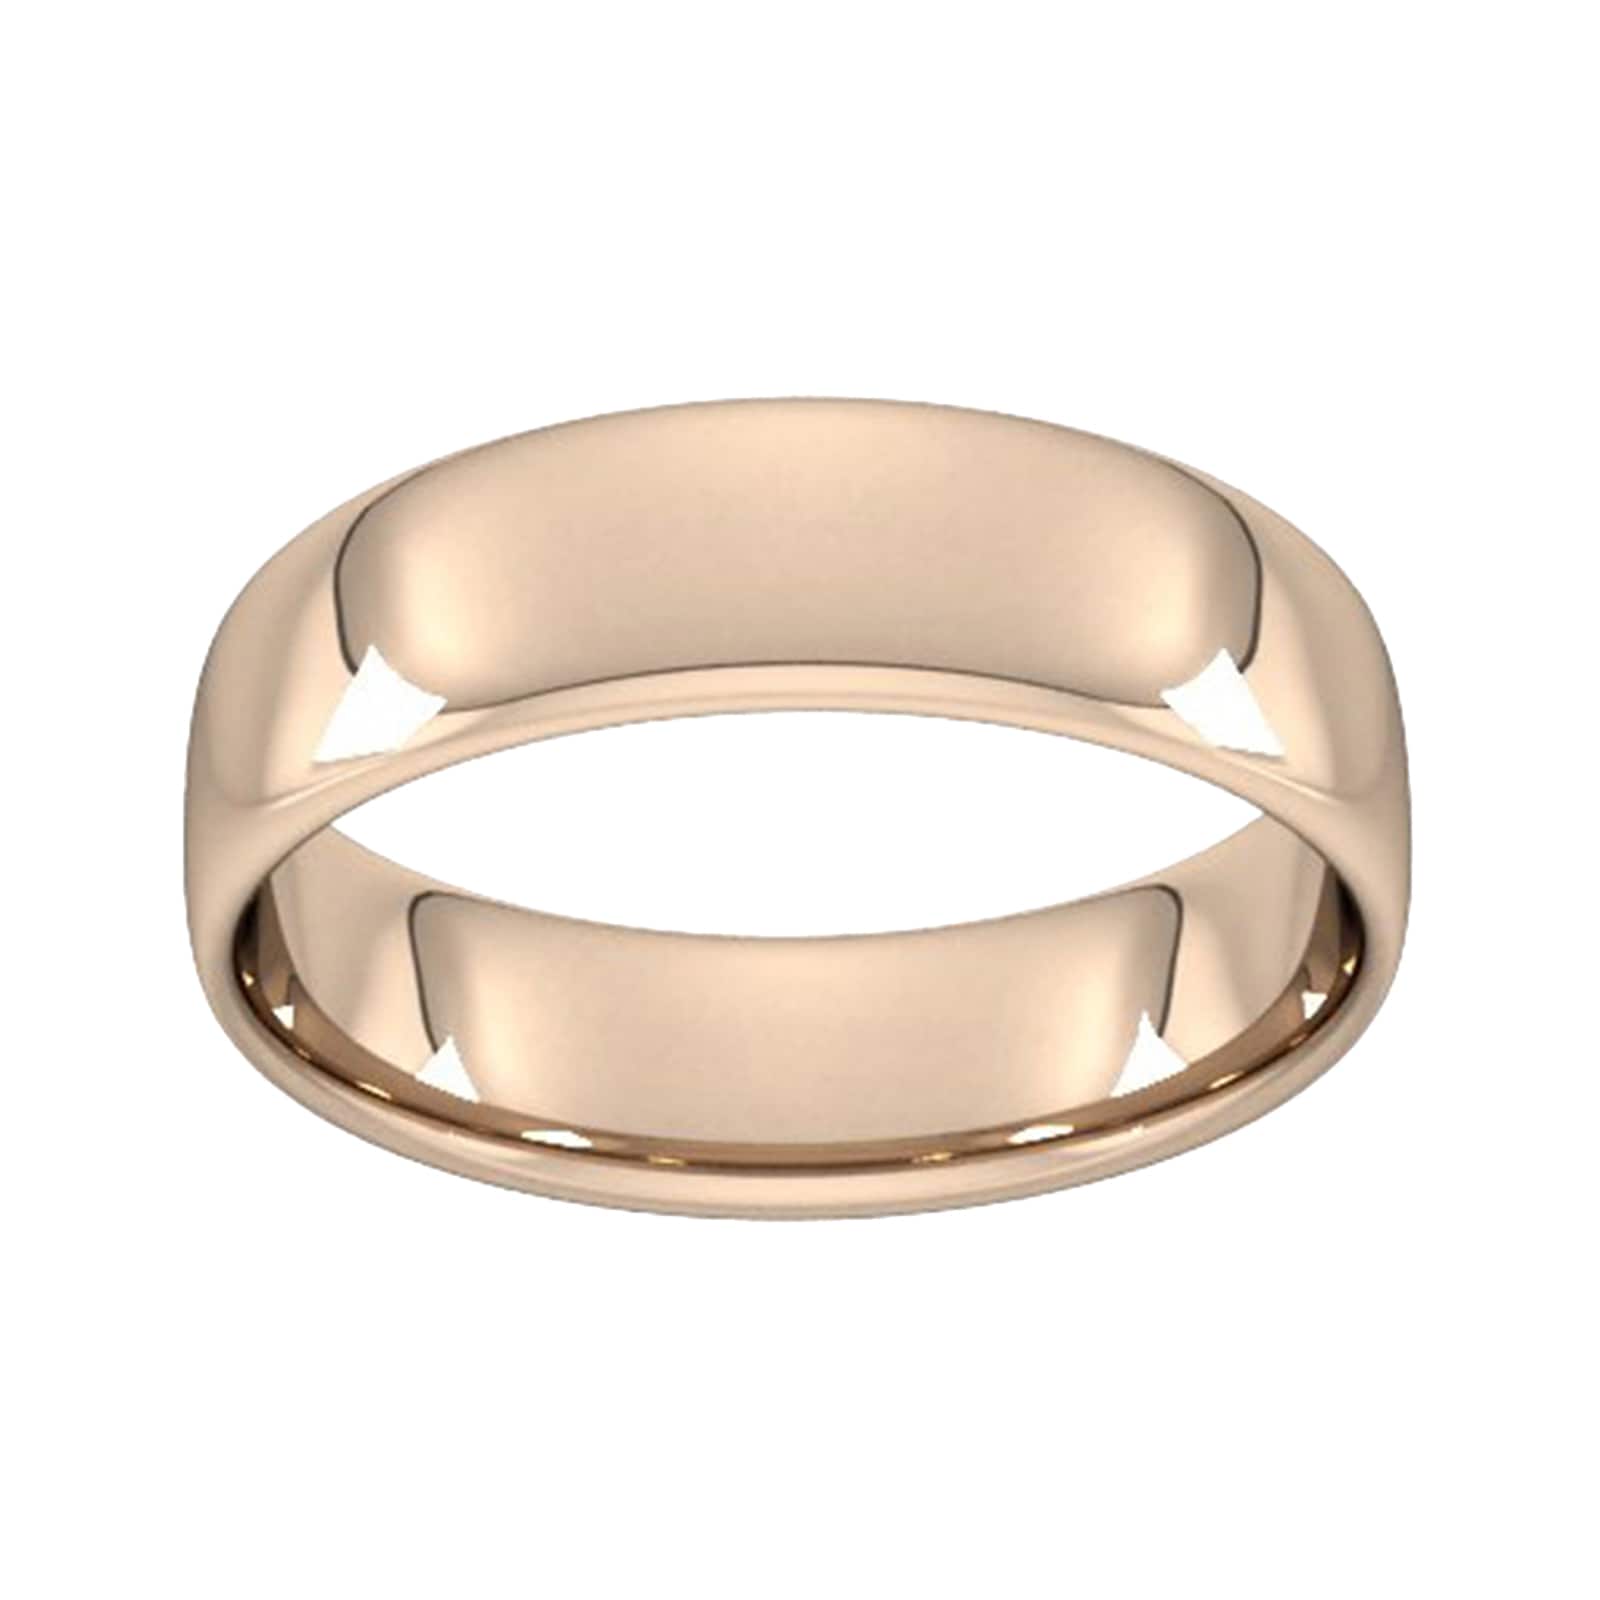 6mm Slight Court Standard Wedding Ring In 18 Carat Rose Gold - Ring Size M